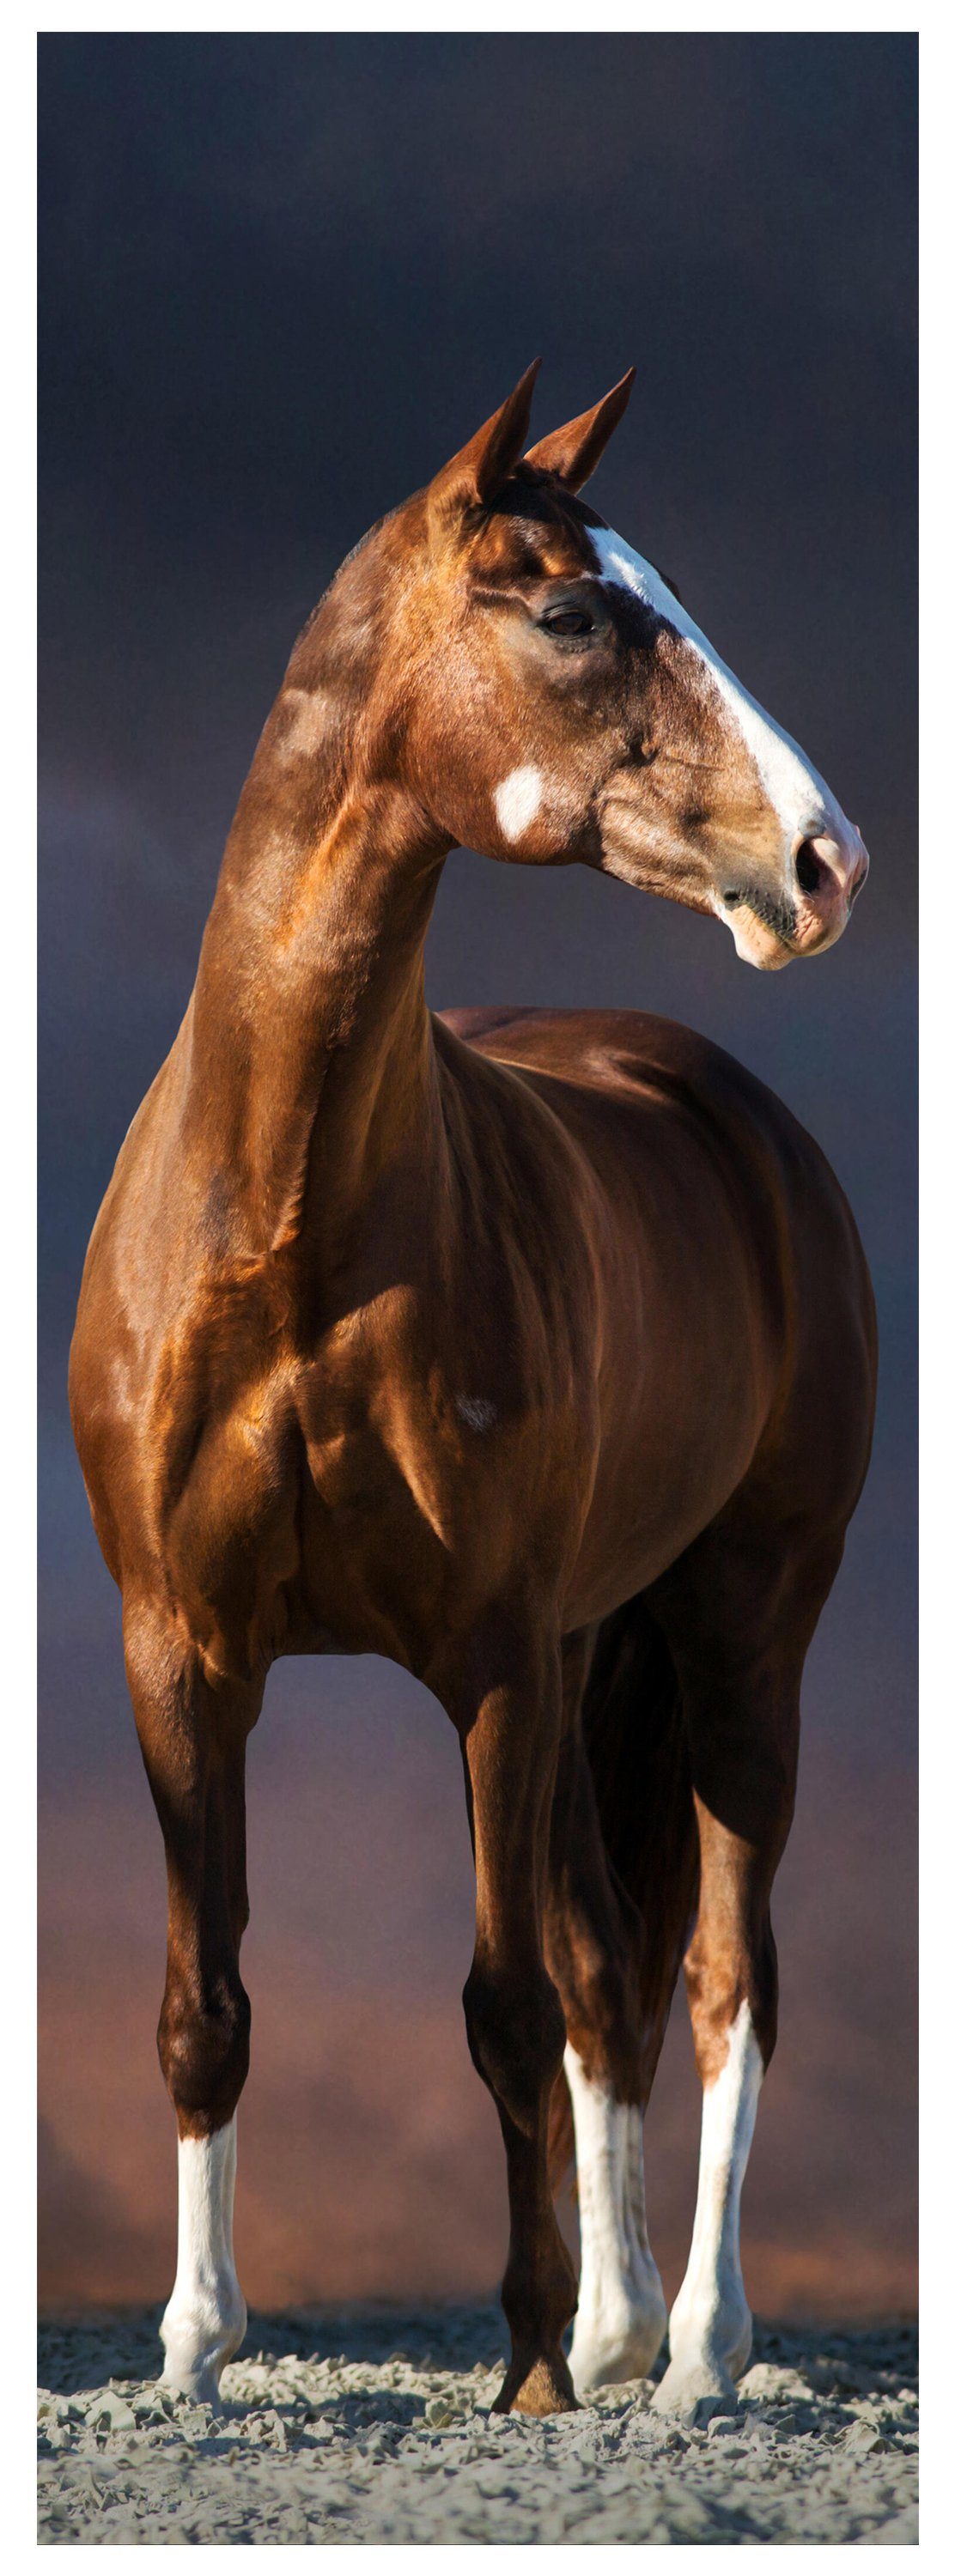 wandmotiv24 Türtapete Pferd auf Pfad, dunkle Wolken, Tiere, glatt, Fototapete, Wandtapete, Motivtapete, matt, selbstklebende Dekorfolie